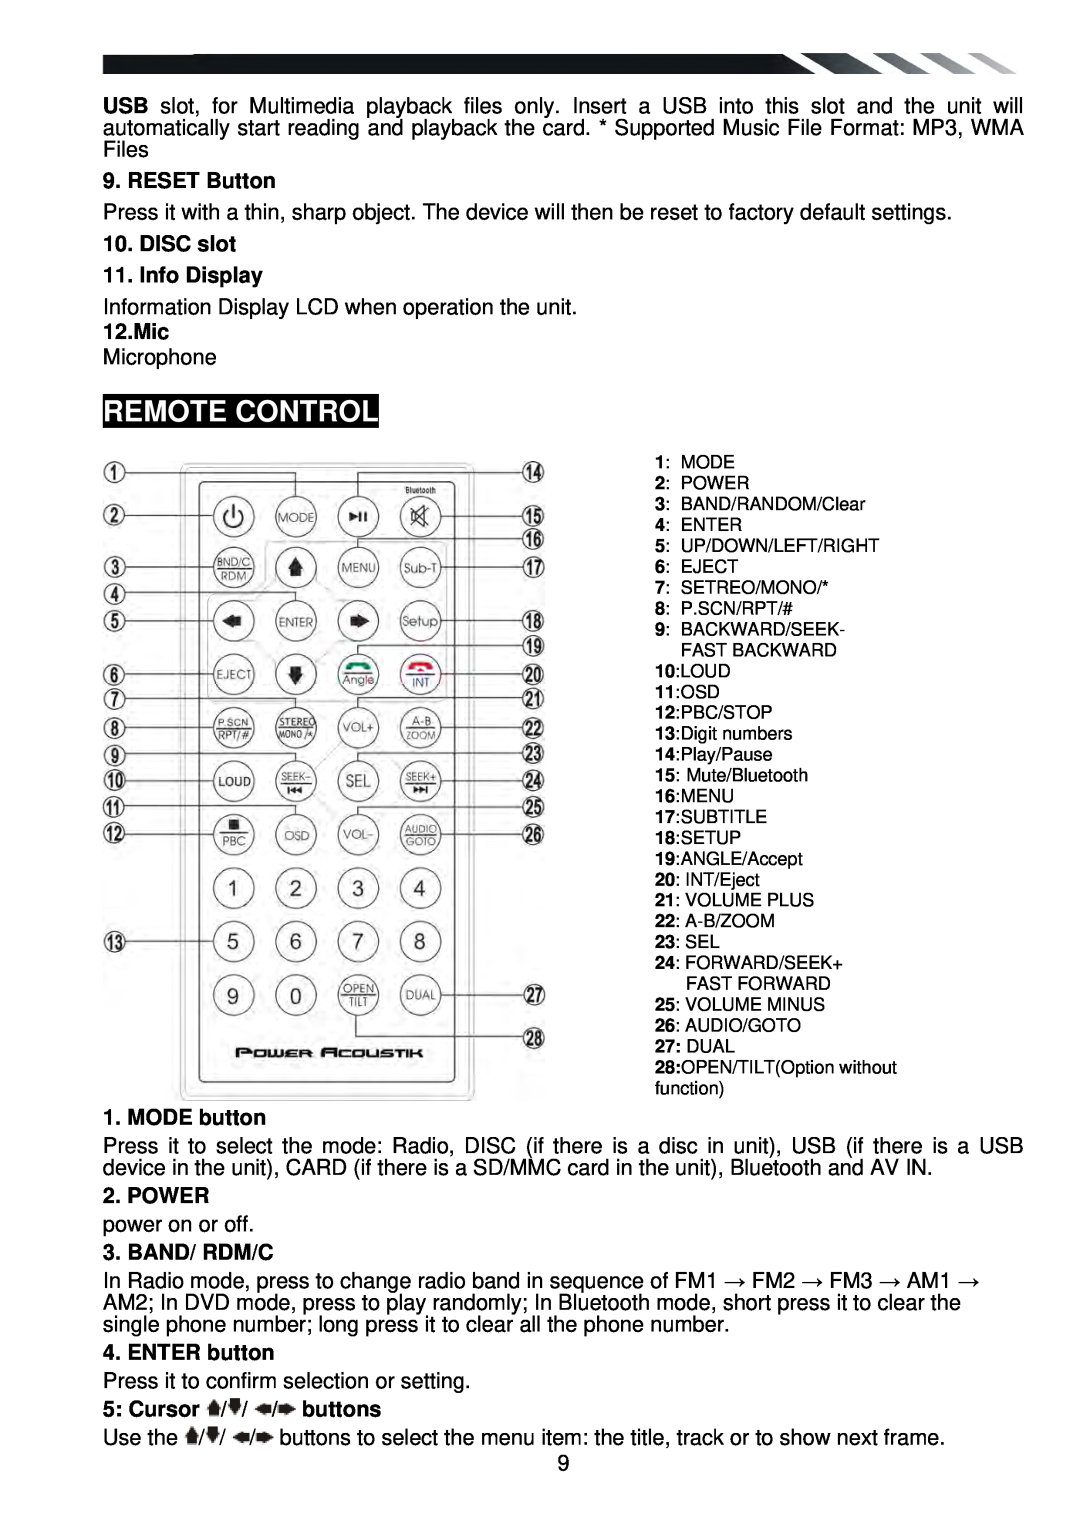 Power Acoustik PTID-6250B Remote Control, RESET Button, DISC slot 11.Info Display, 12.Mic, MODE button, Band/ Rdm/C 